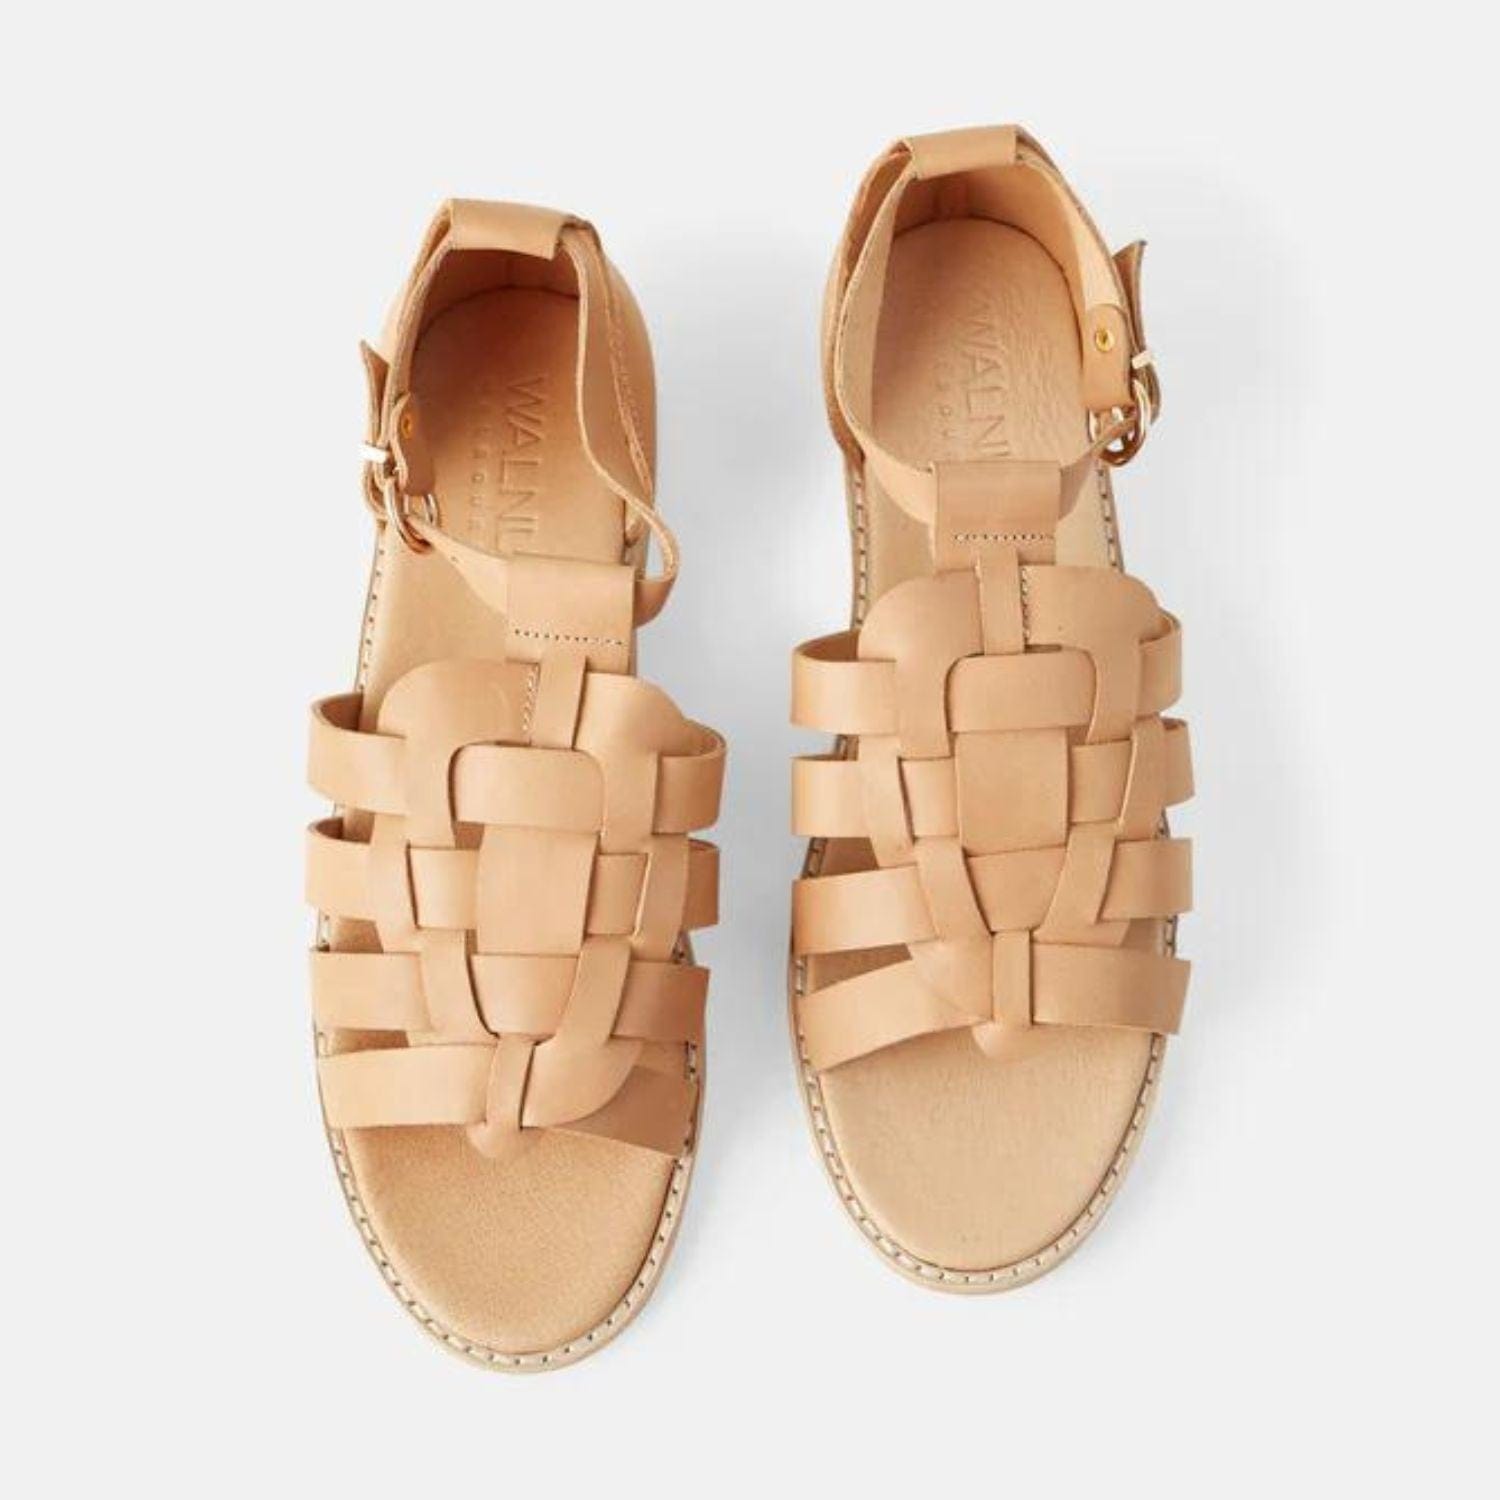 Walnut Essie Leather Sandal - Tan